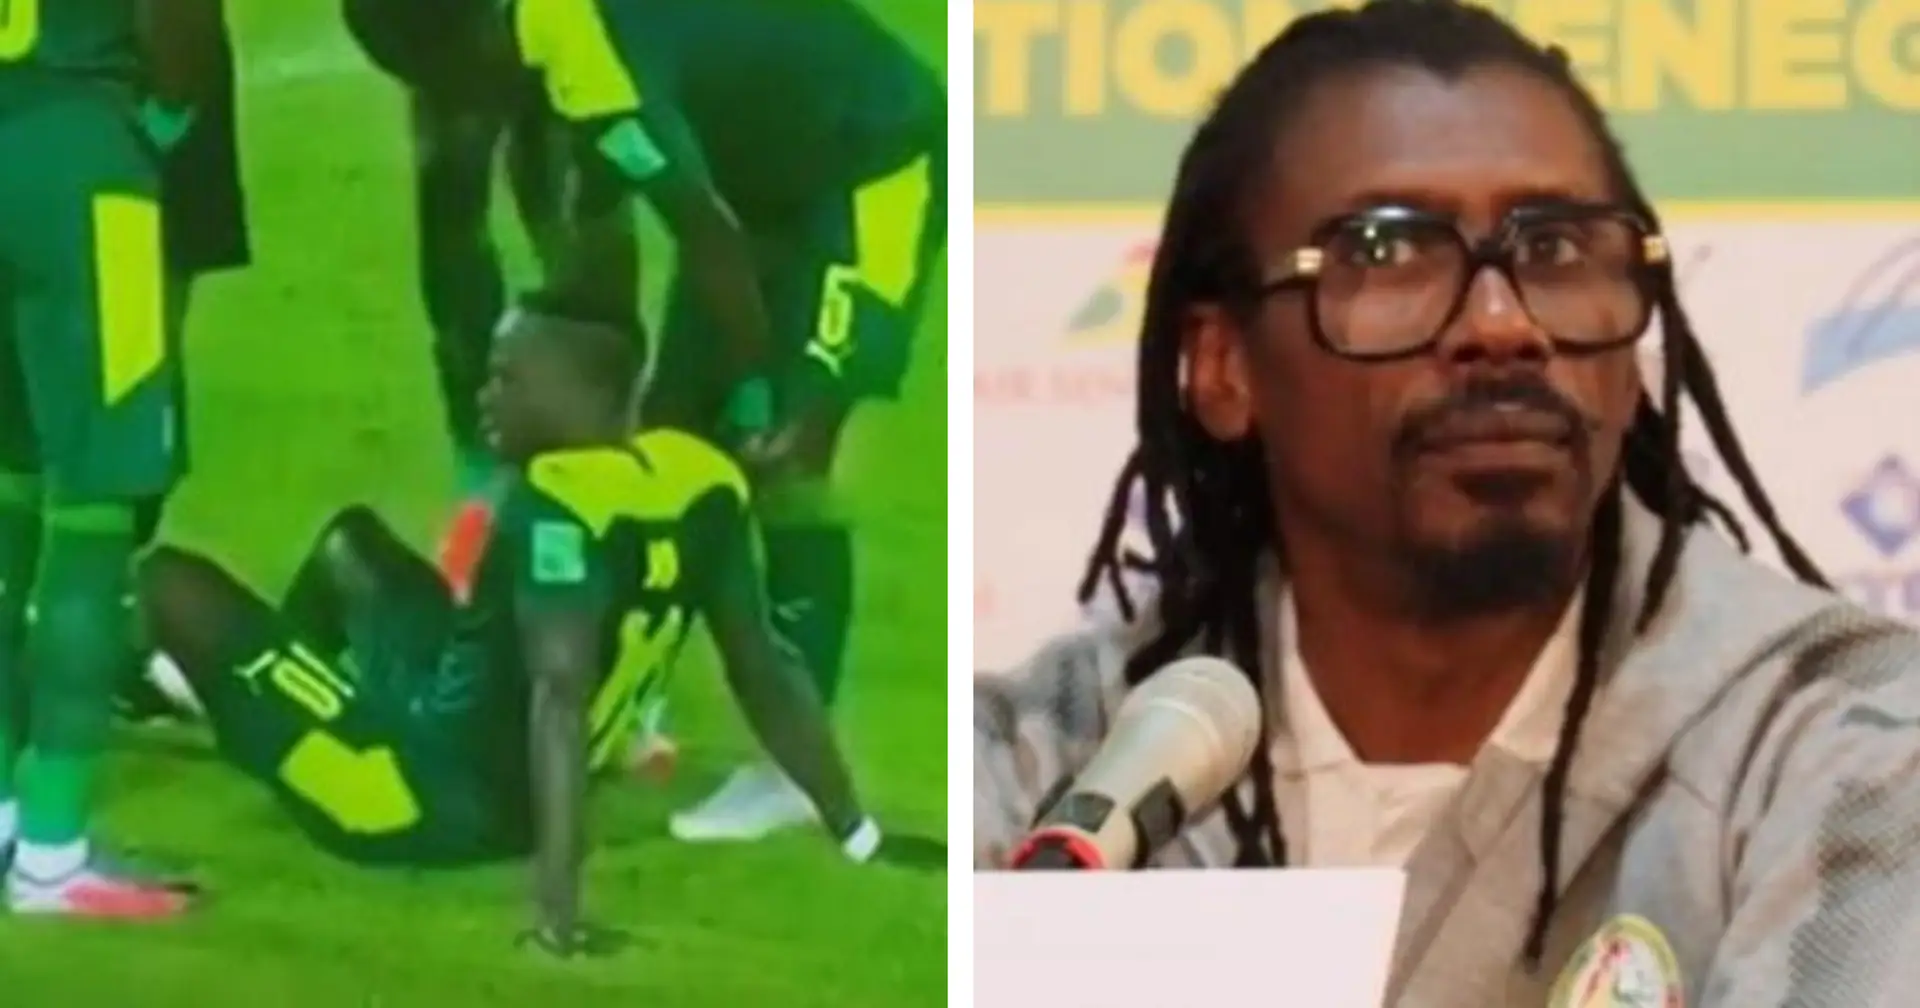 Mane goes off injured during international game, Senegal coach provides update